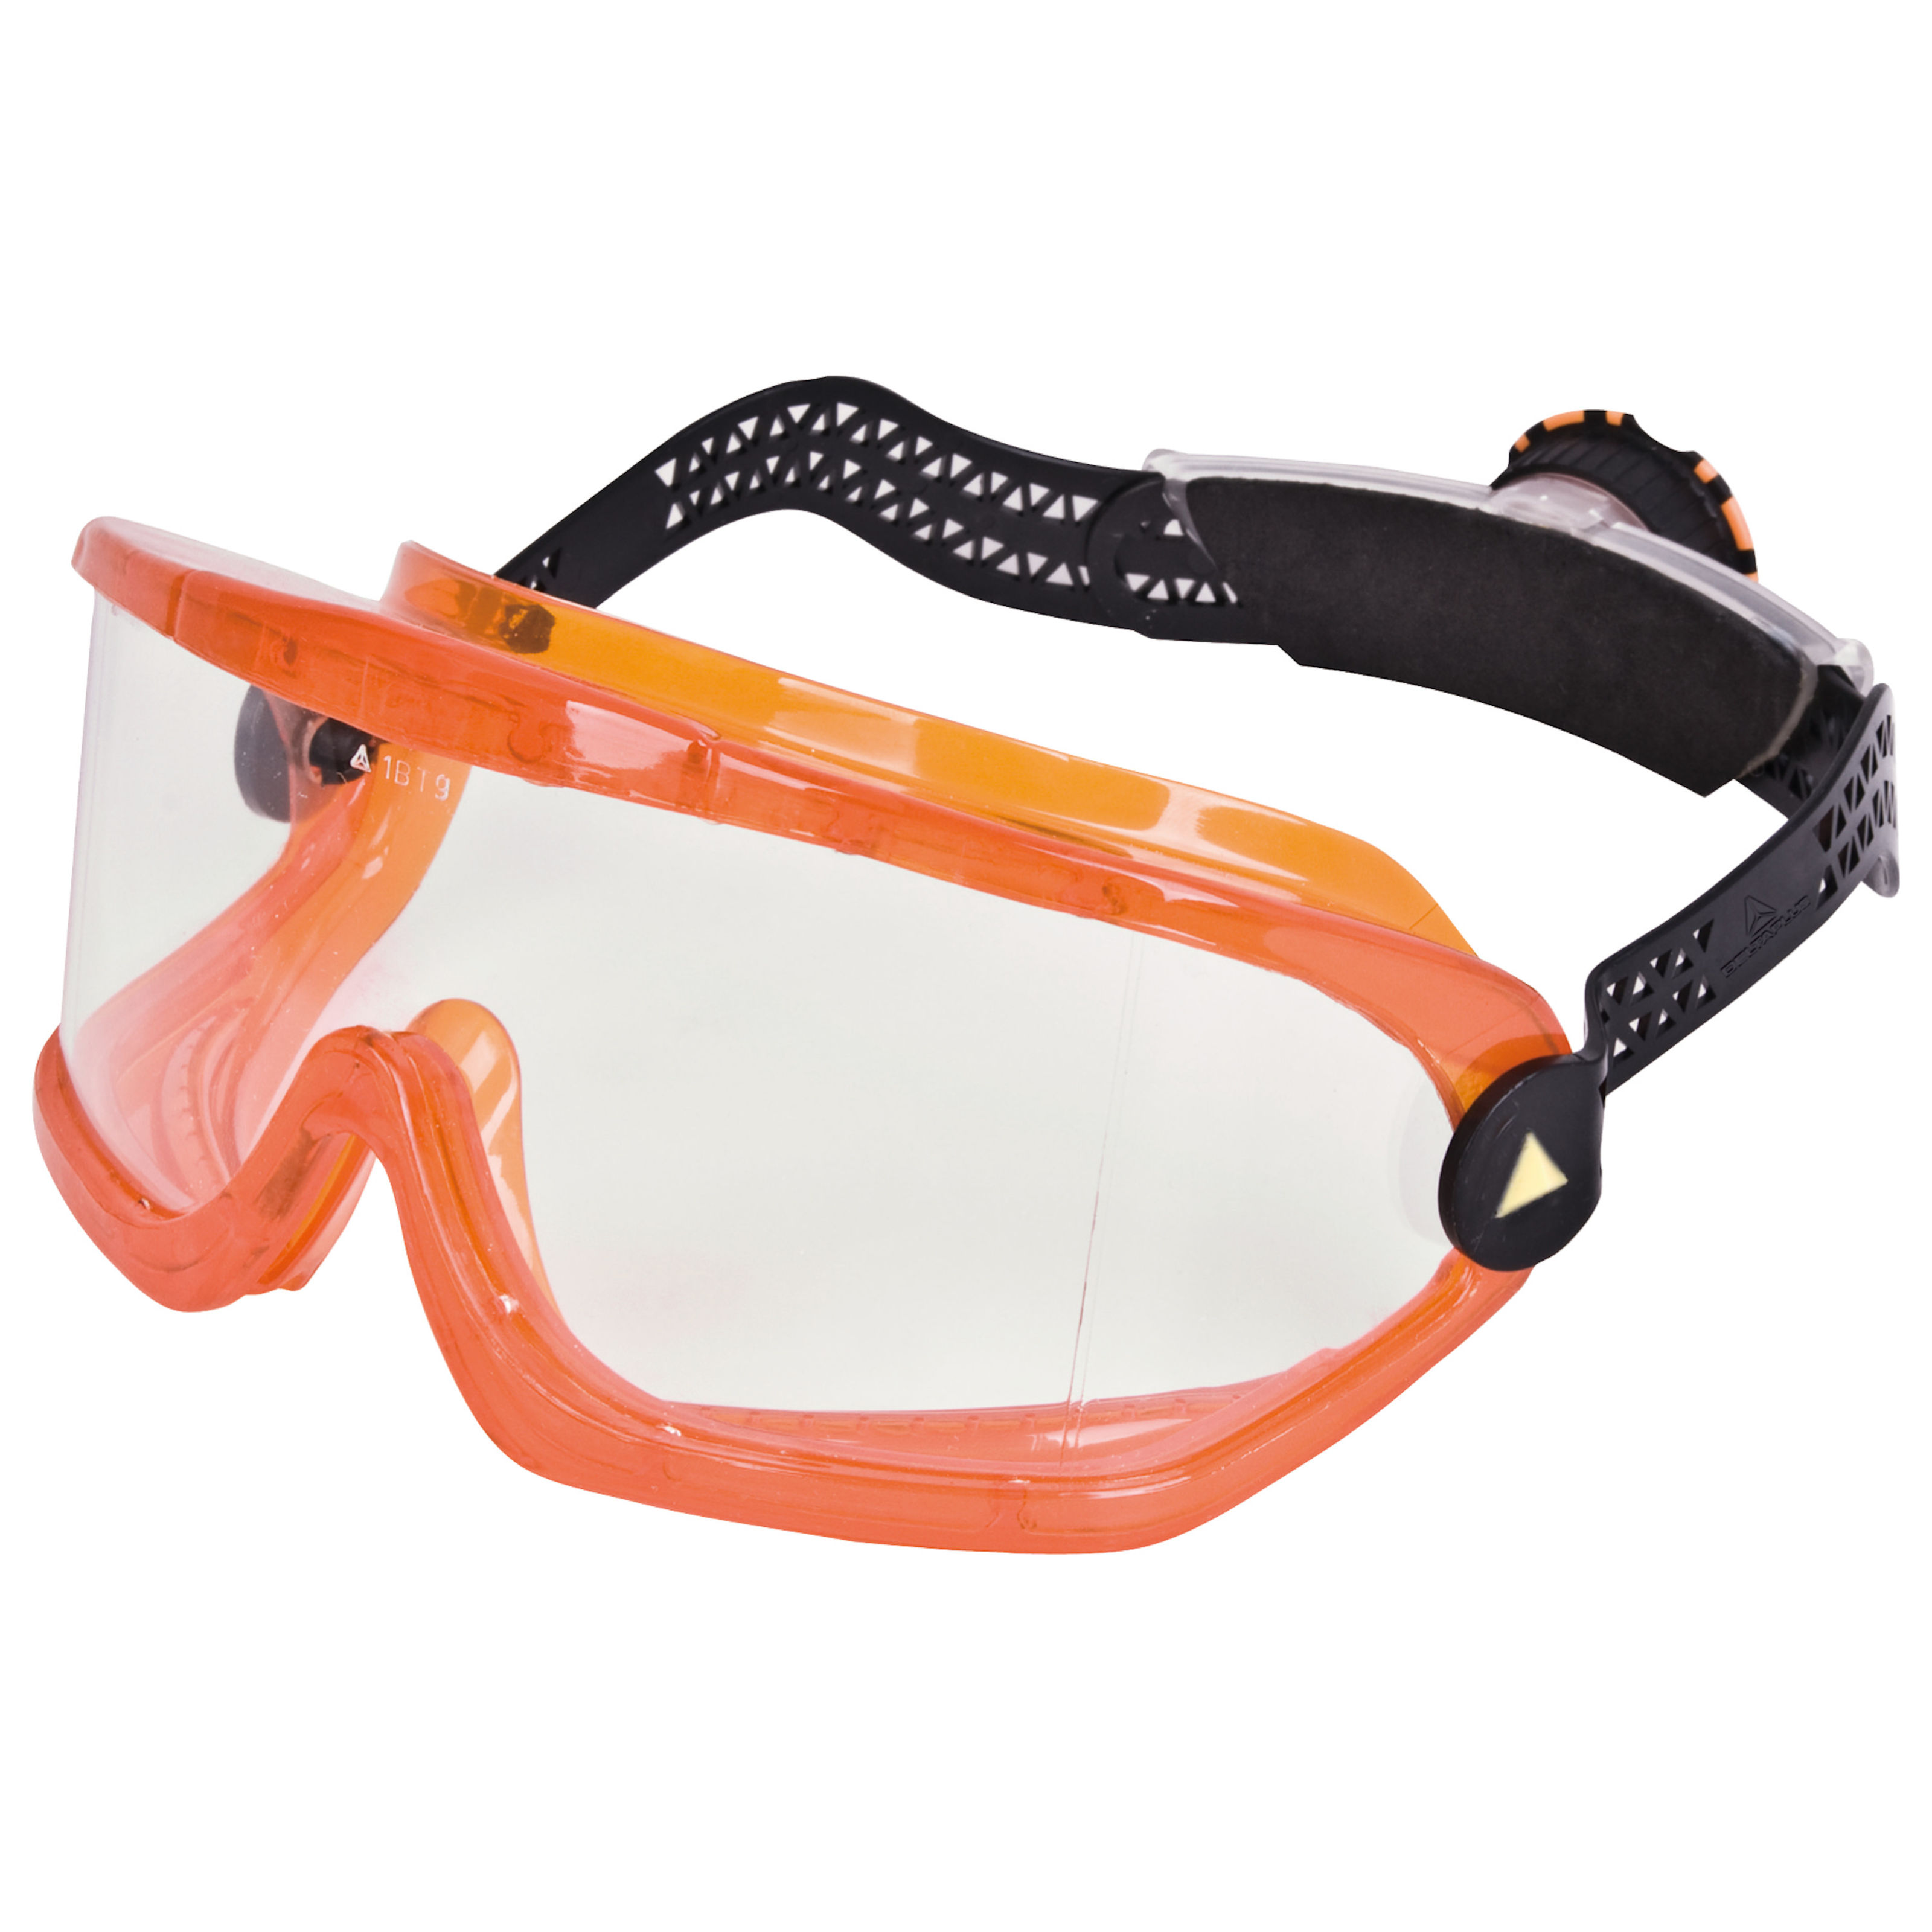 Delta Plus Saba Safety Goggles